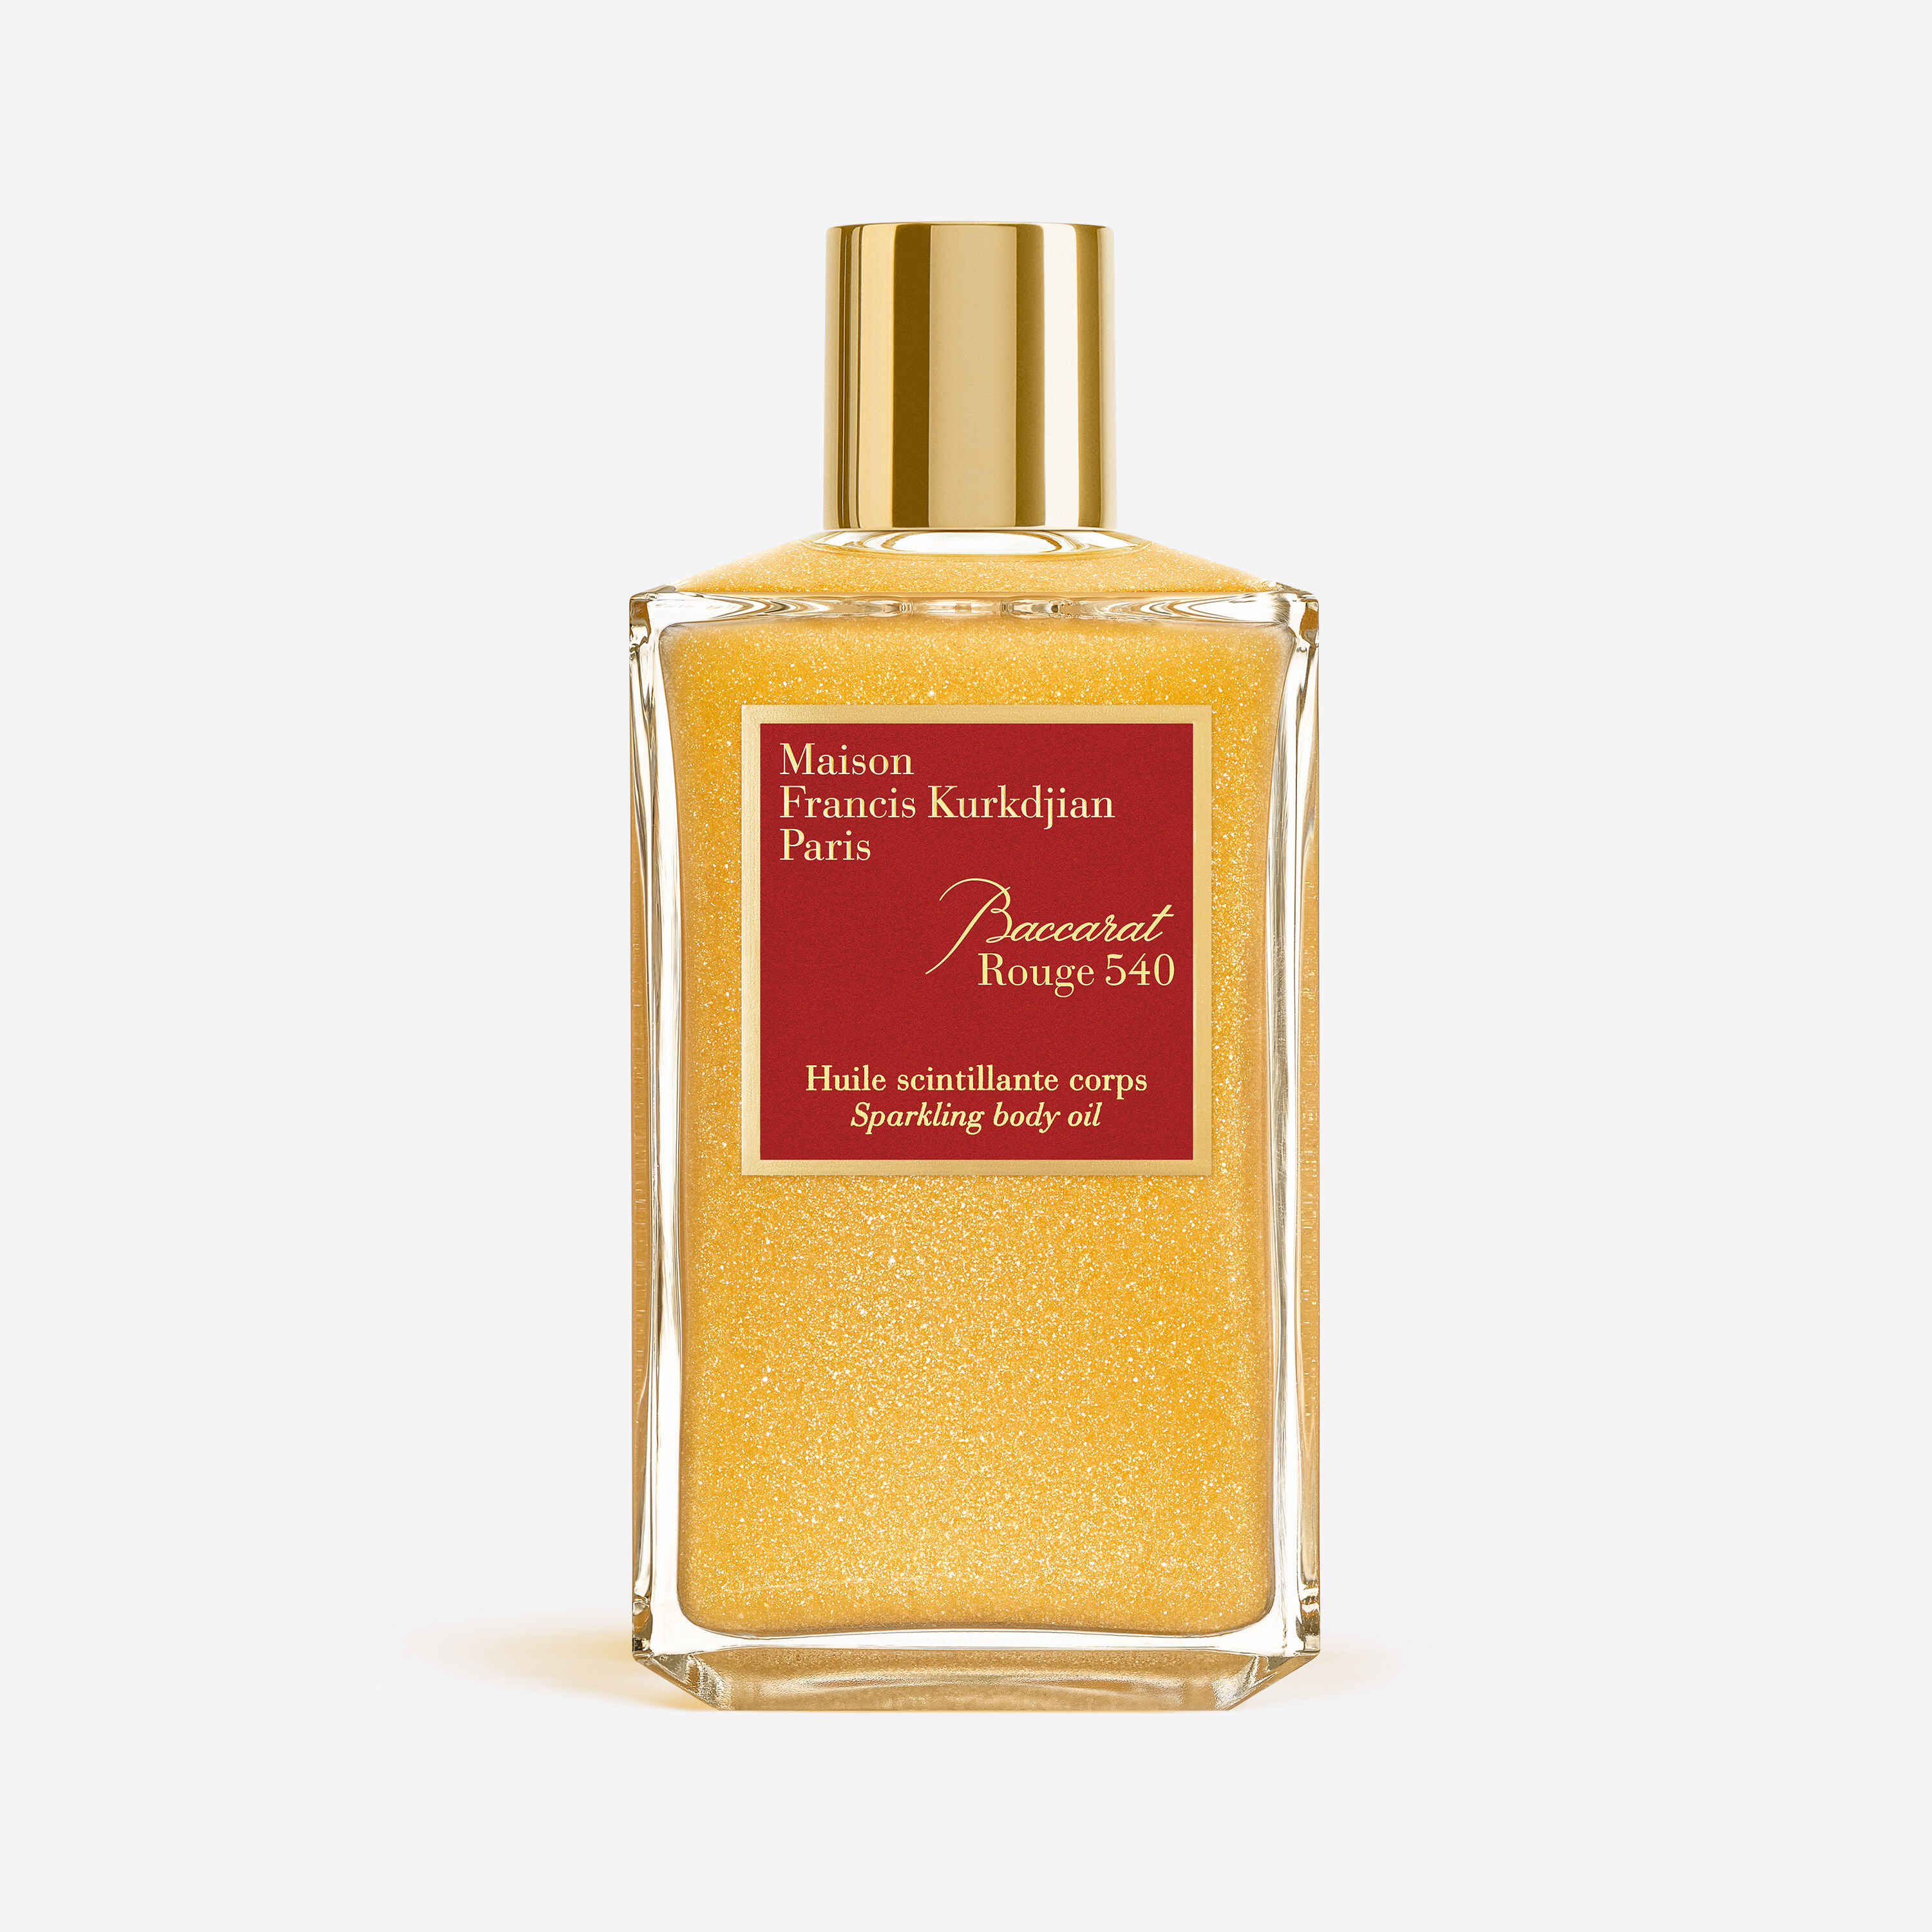 Buy Amber Fragrance Oil Online at Best Price